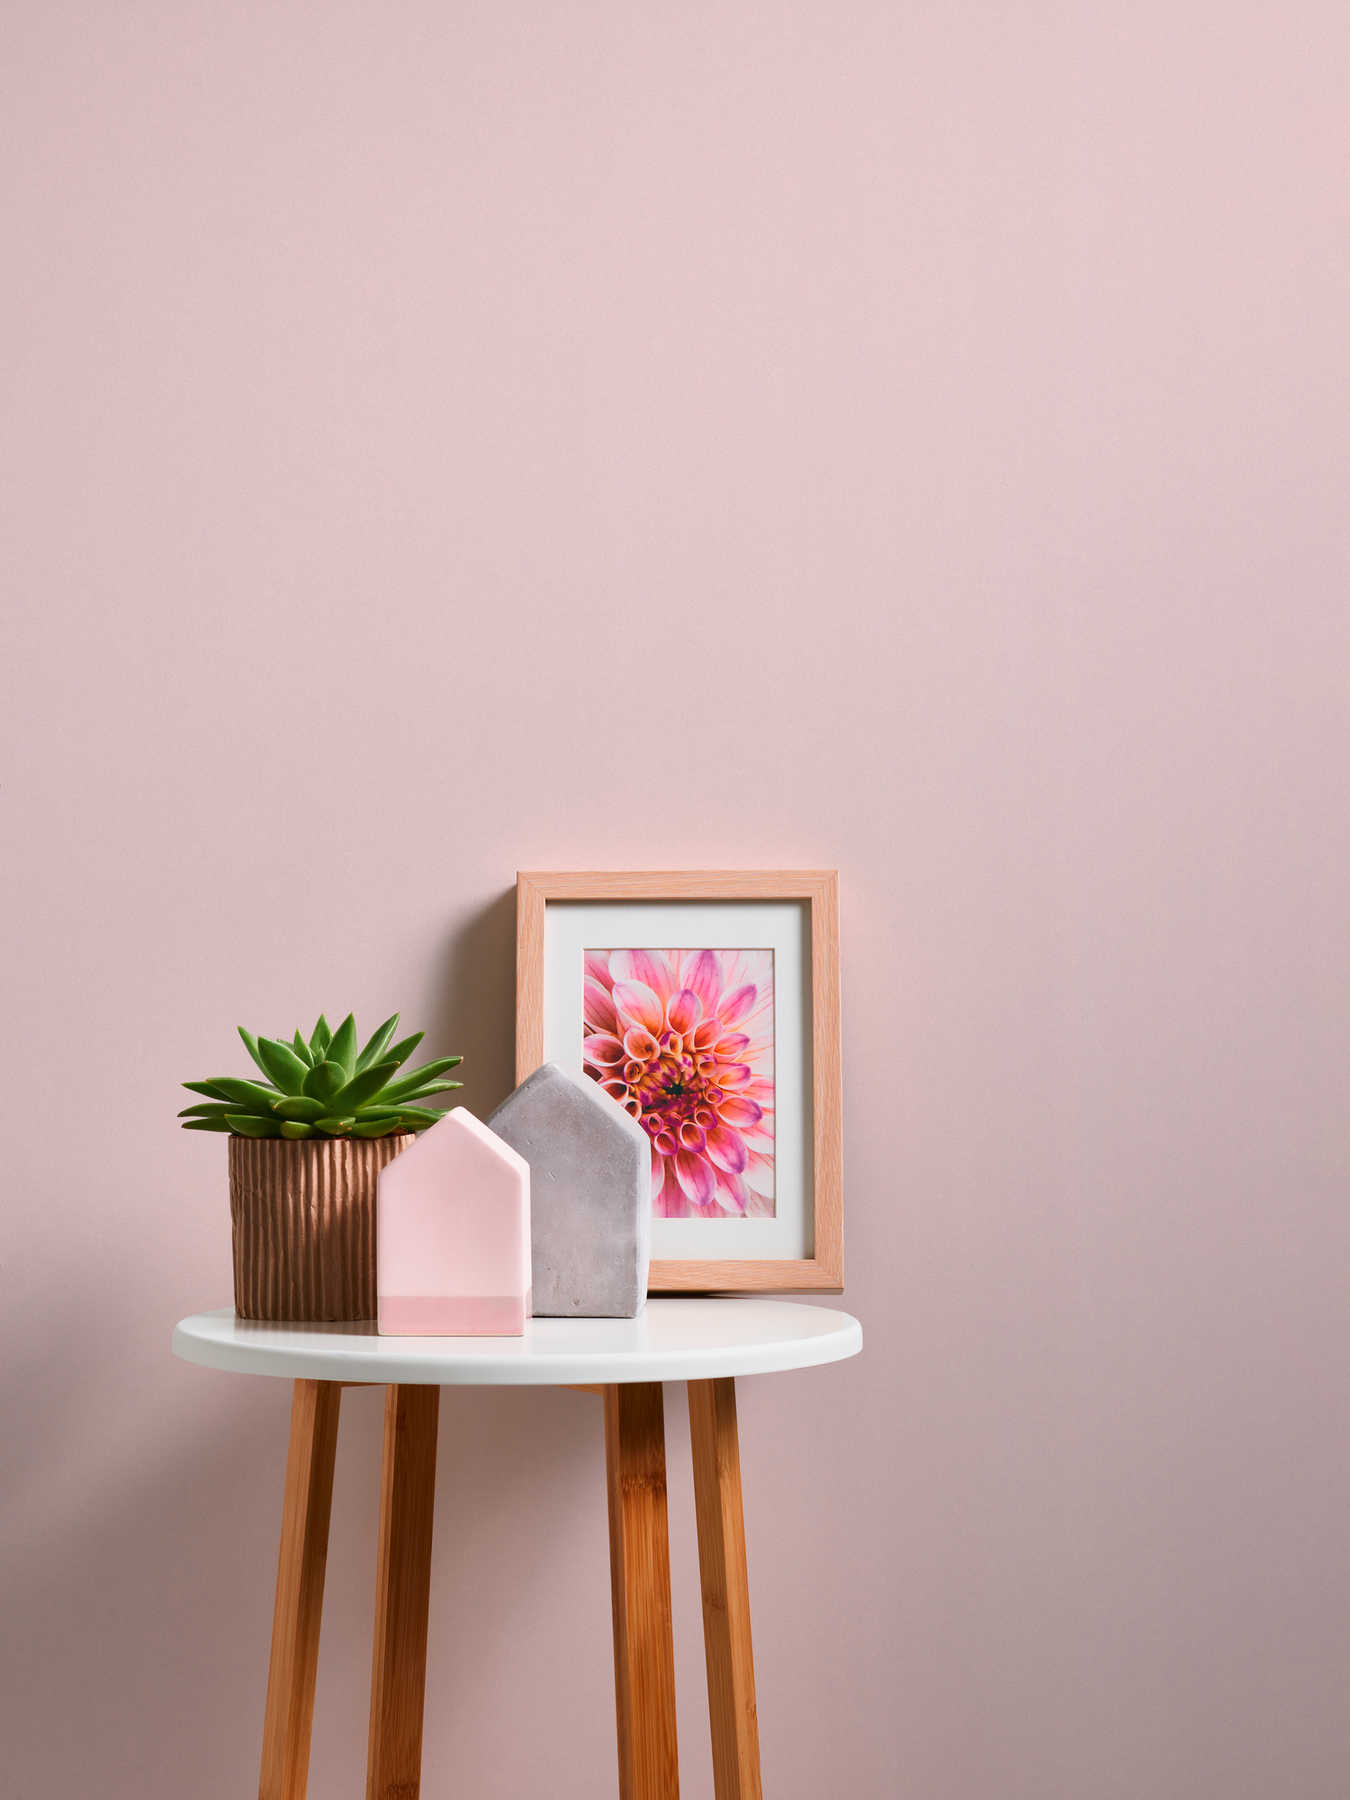             Plain wallpaper warm colour, textured - pink
        